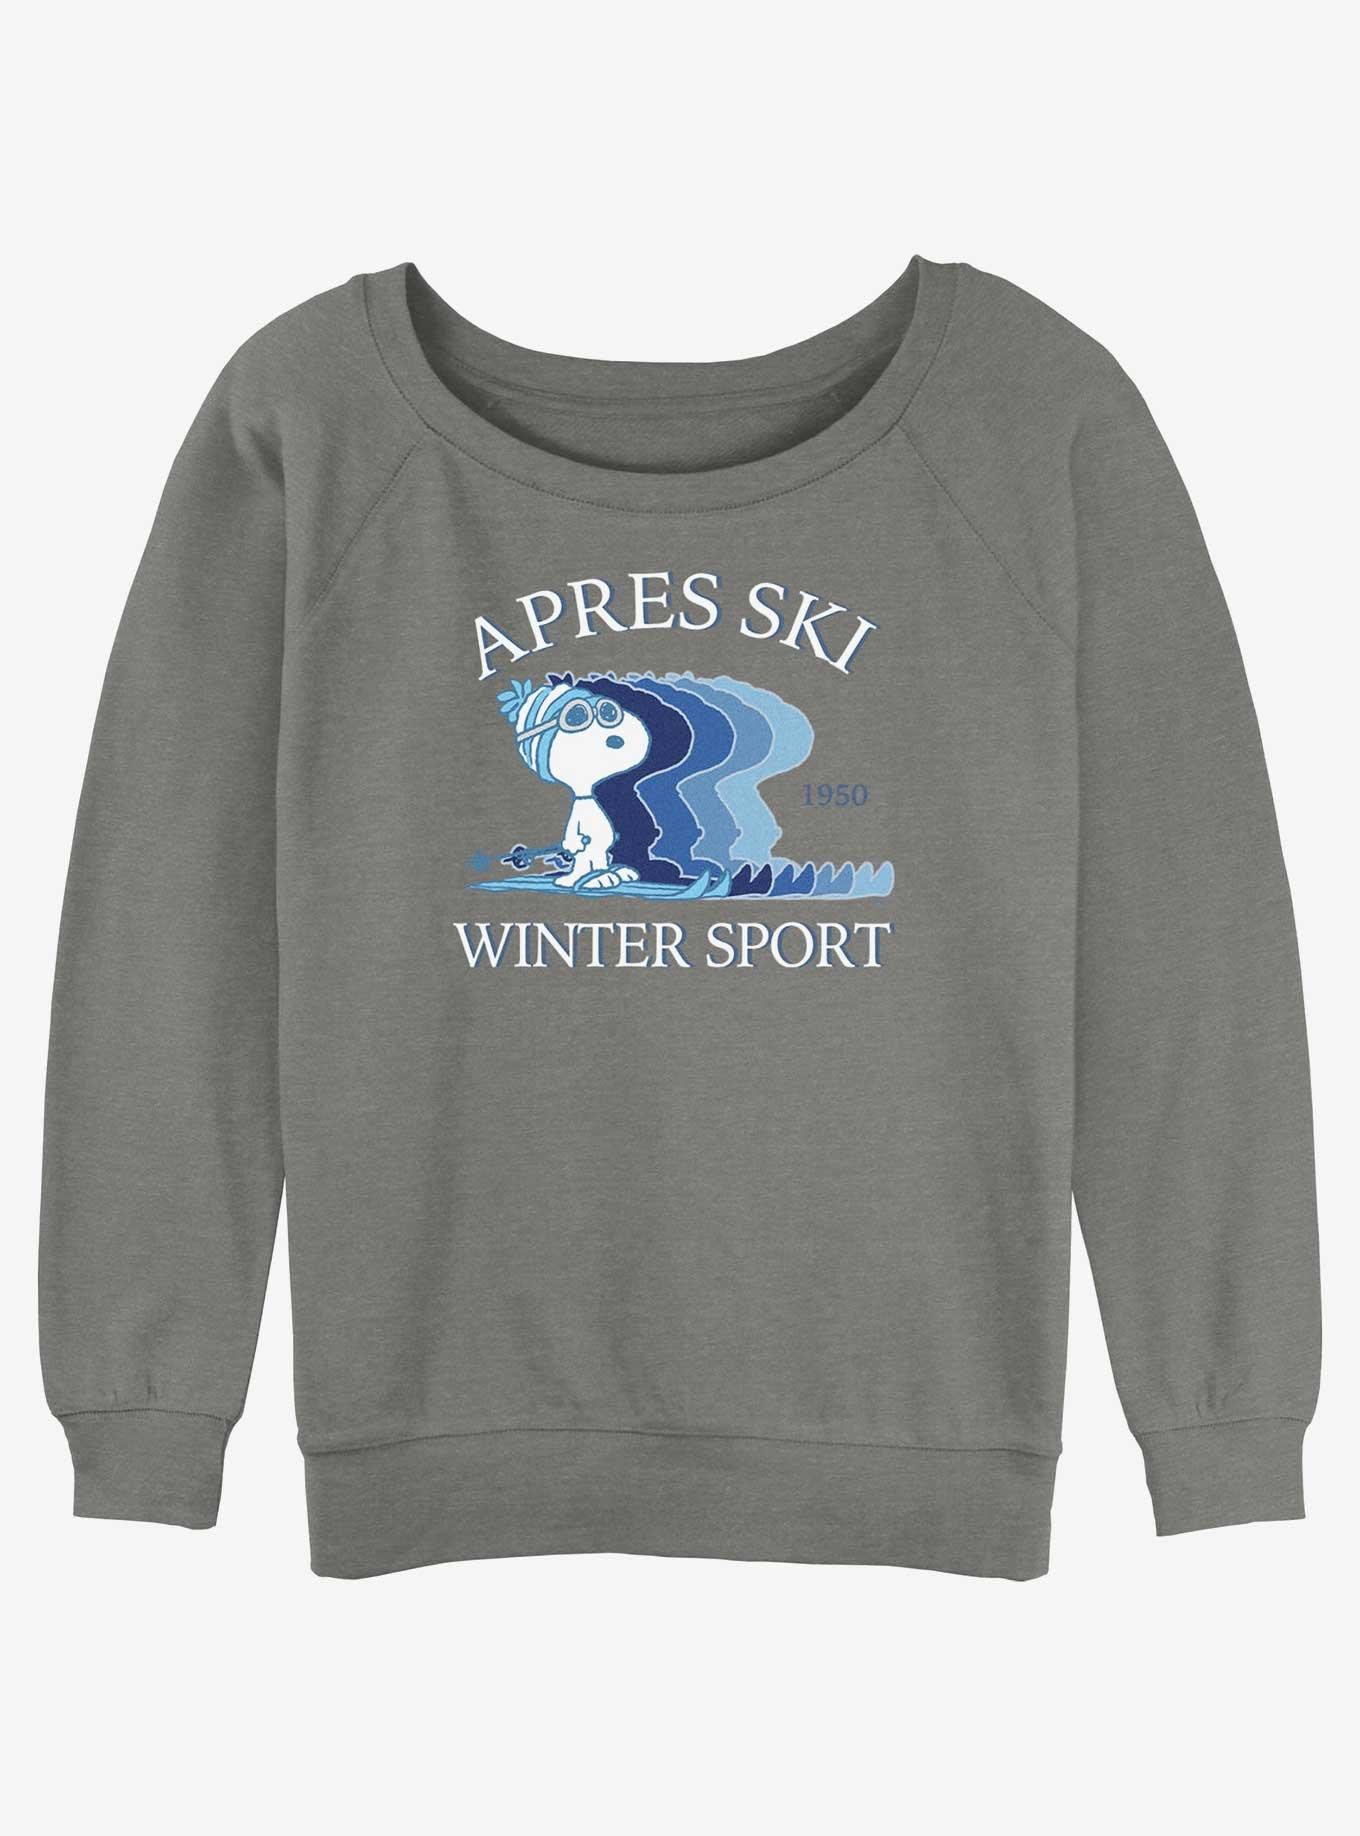 Hot Topic Peanuts Snoopy Apres Ski Winter Sport Girls Slouchy Sweatshirt